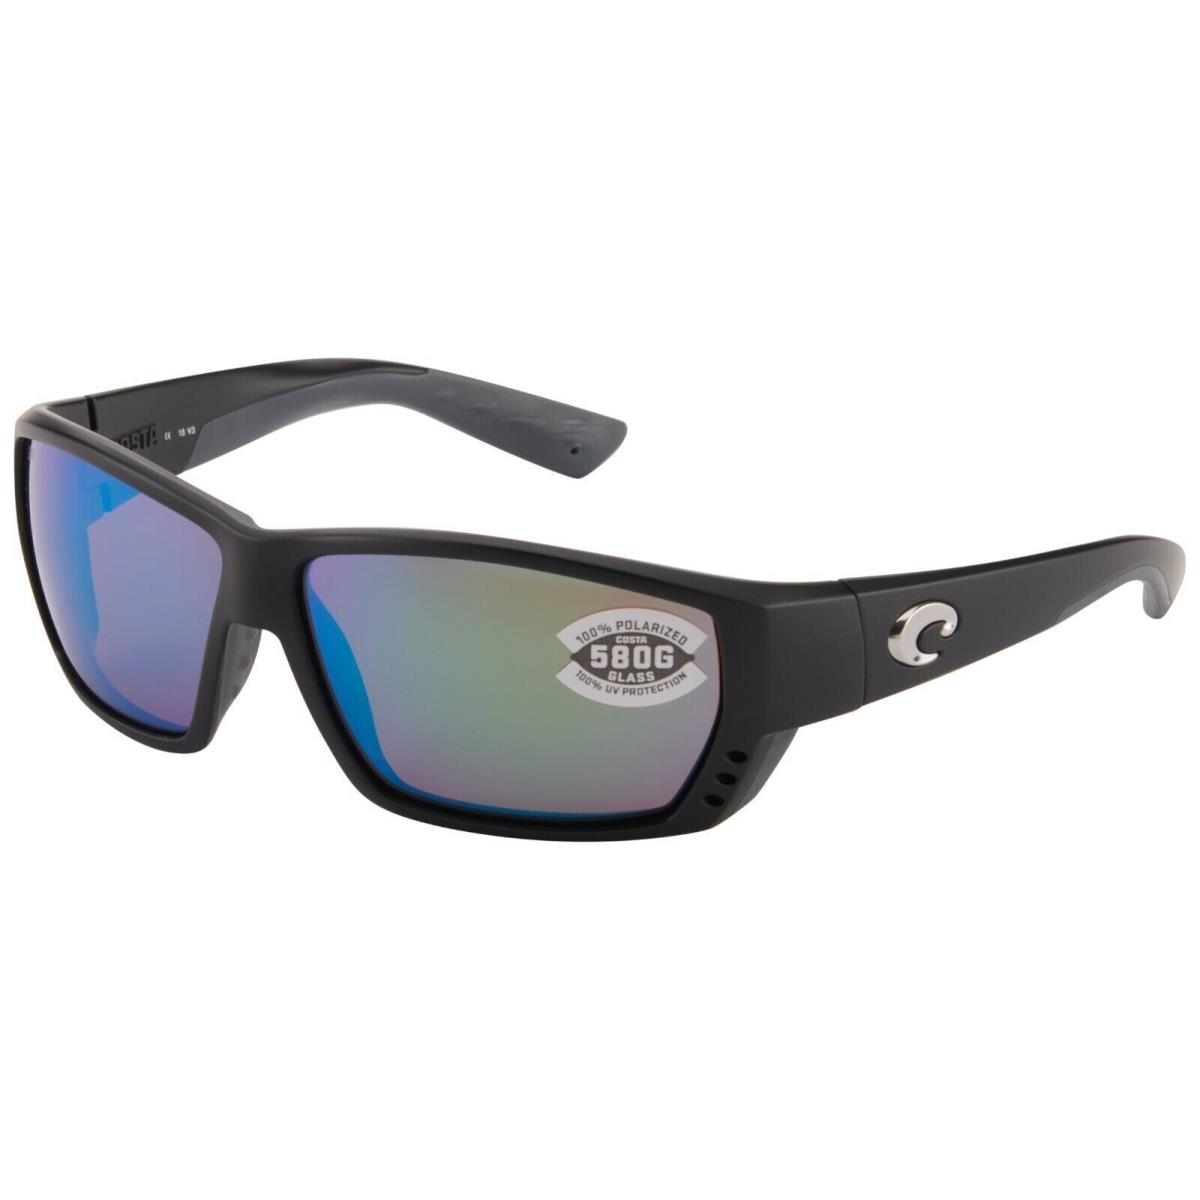 Costa Del Mar TA 11 Ogmglp Tuna Alley Sunglasses Matte Black Green Mirror 580G